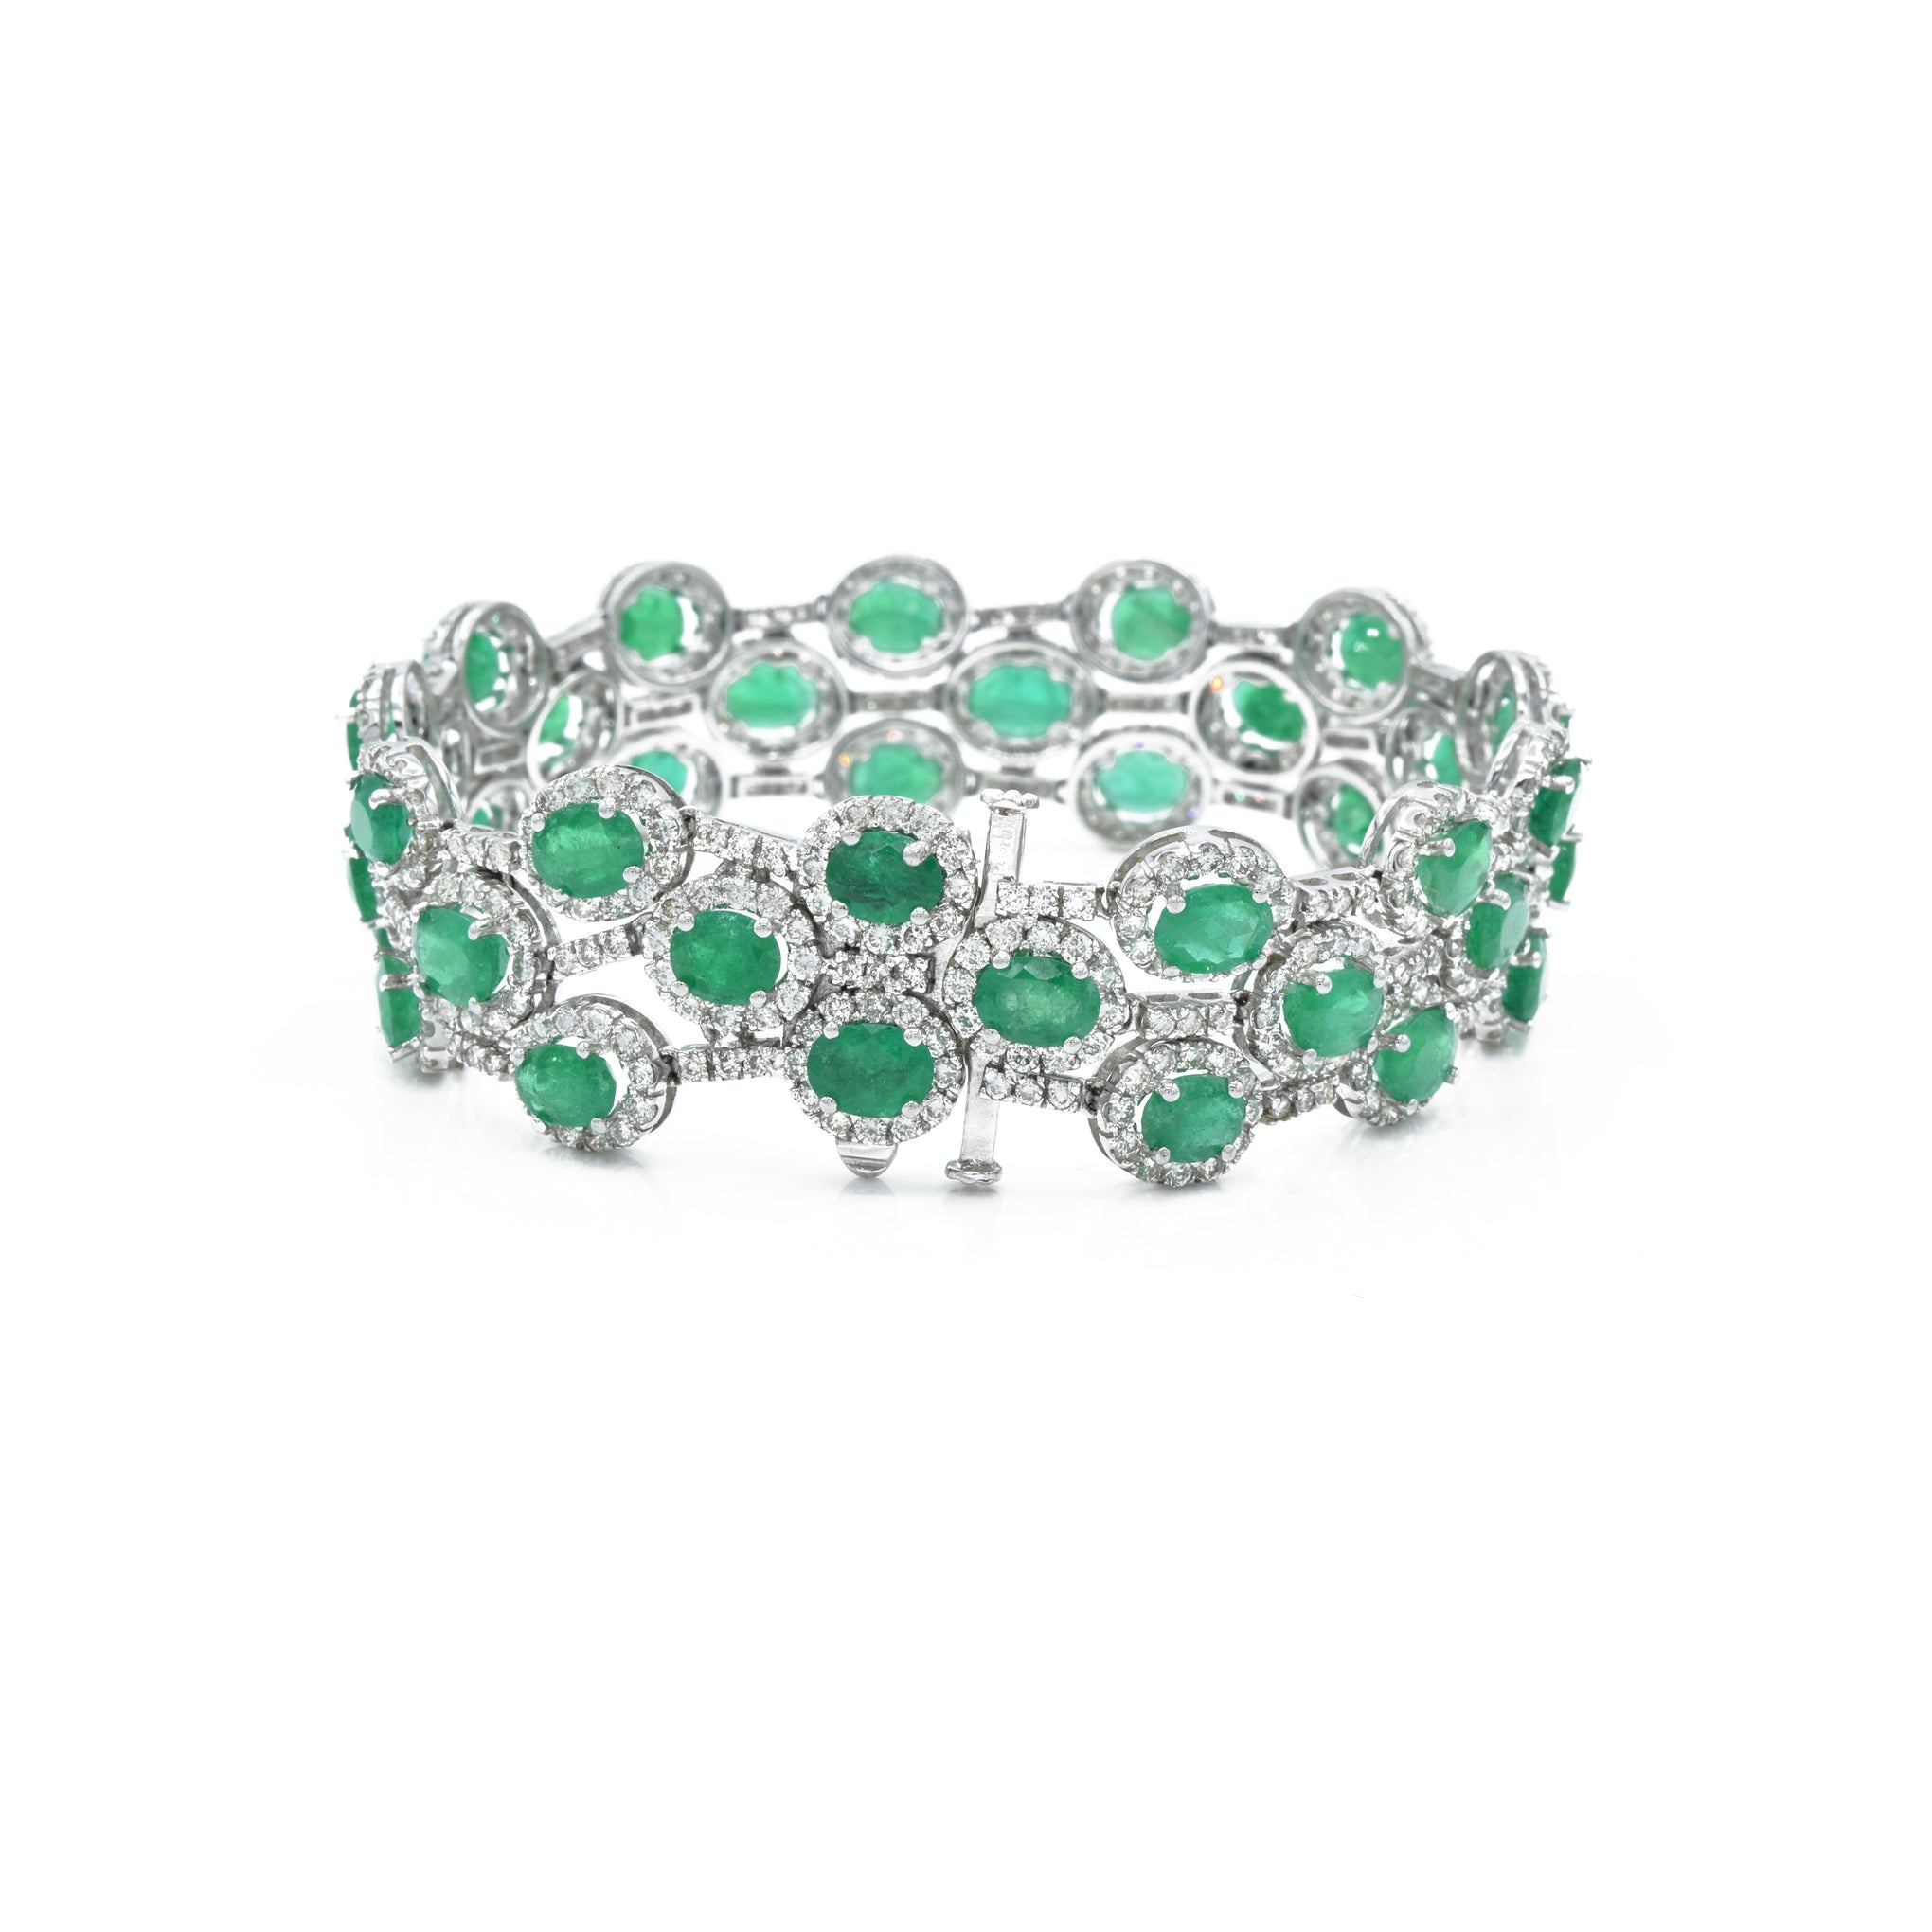 18kt White Gold Diamond and Emerald Bracelet